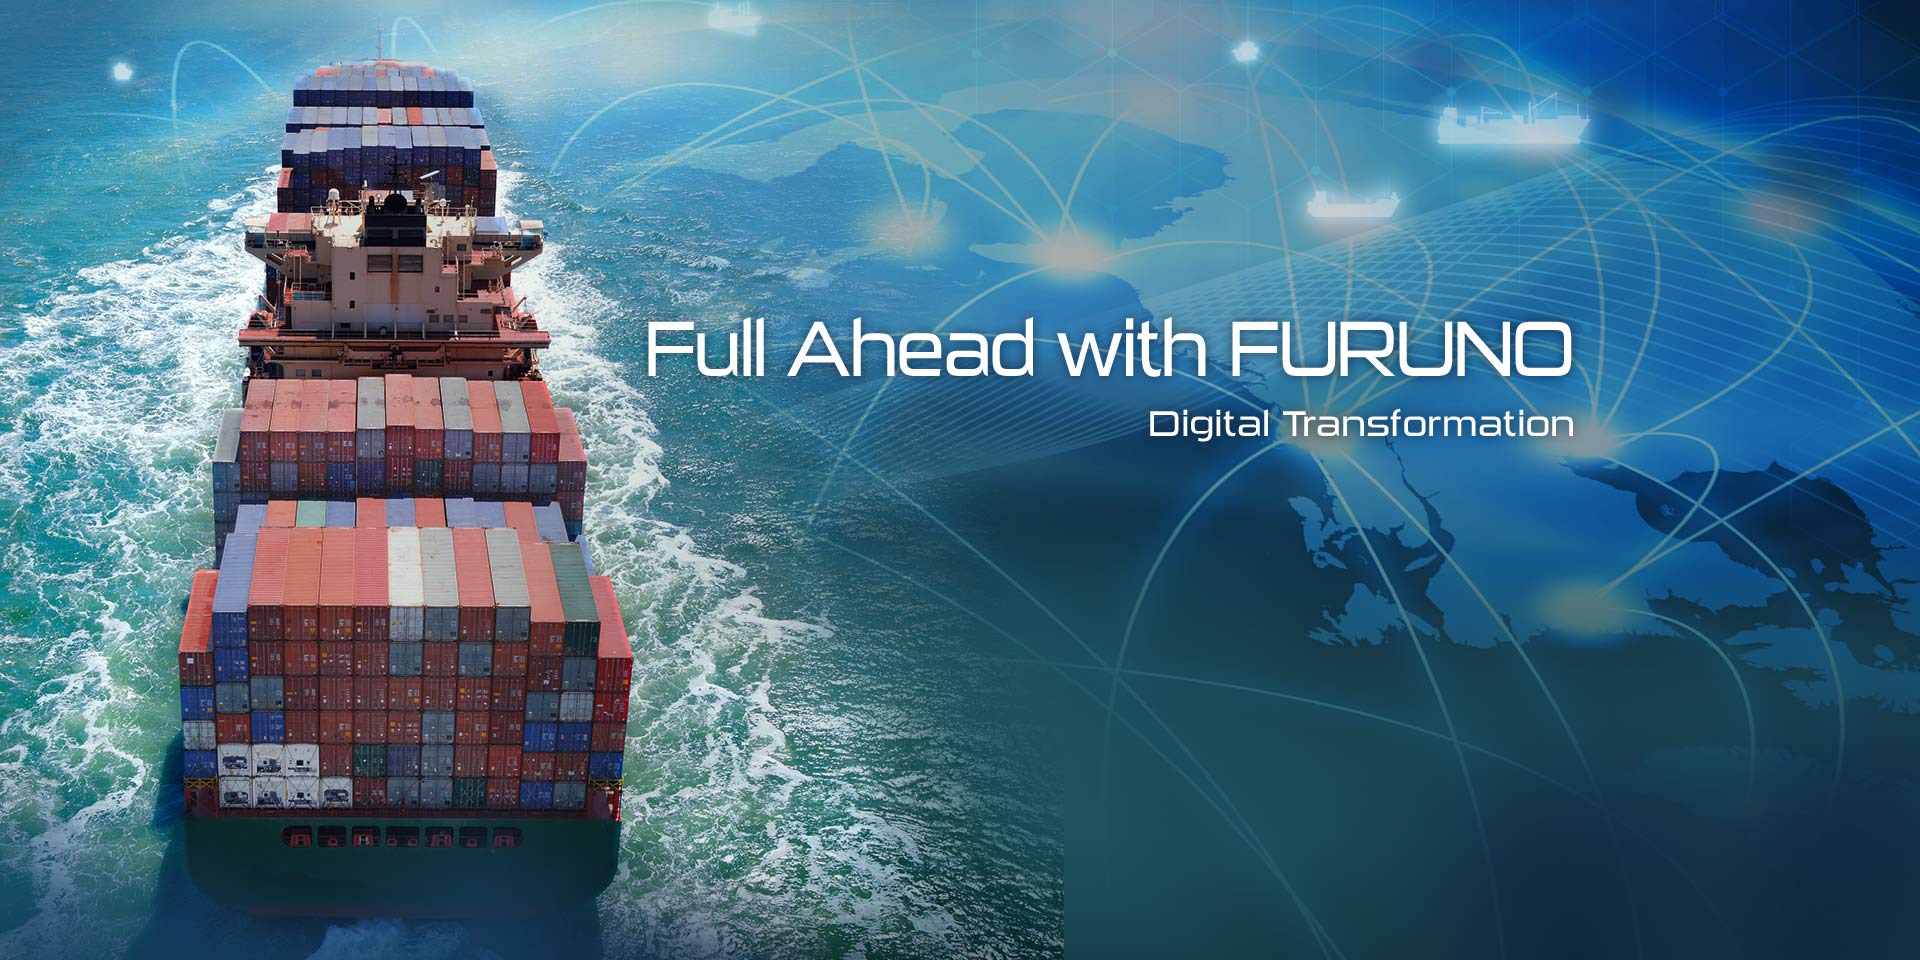 Towards the digital transformation of ships, Full Ahead